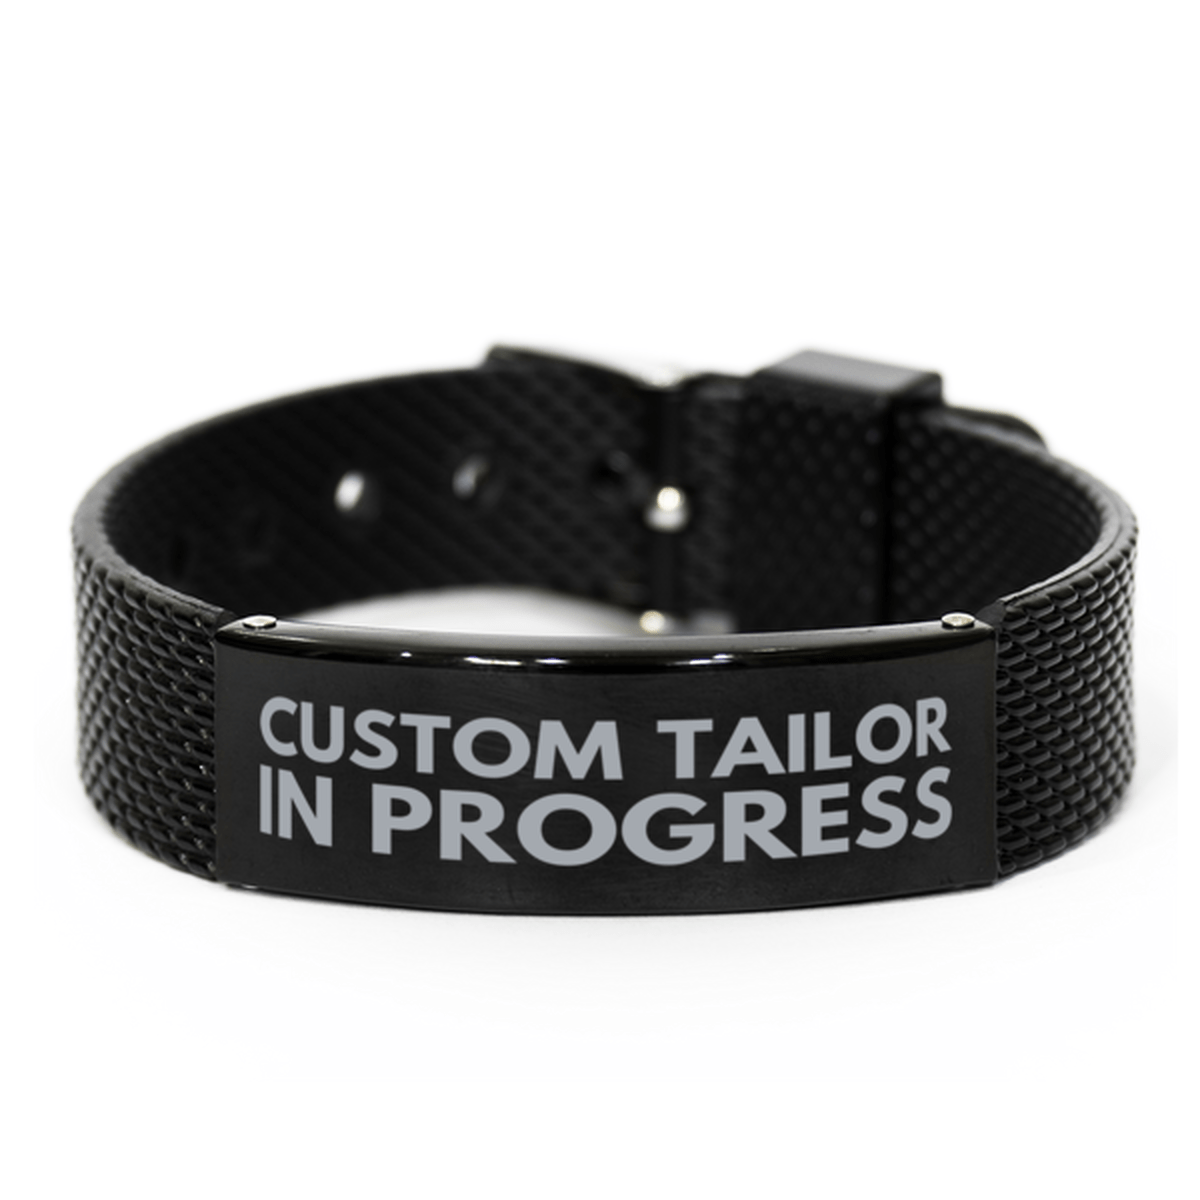 Inspirational Custom Tailor Black Shark Mesh Bracelet, Custom Tailor In Progress, Best Graduation Gifts for Students